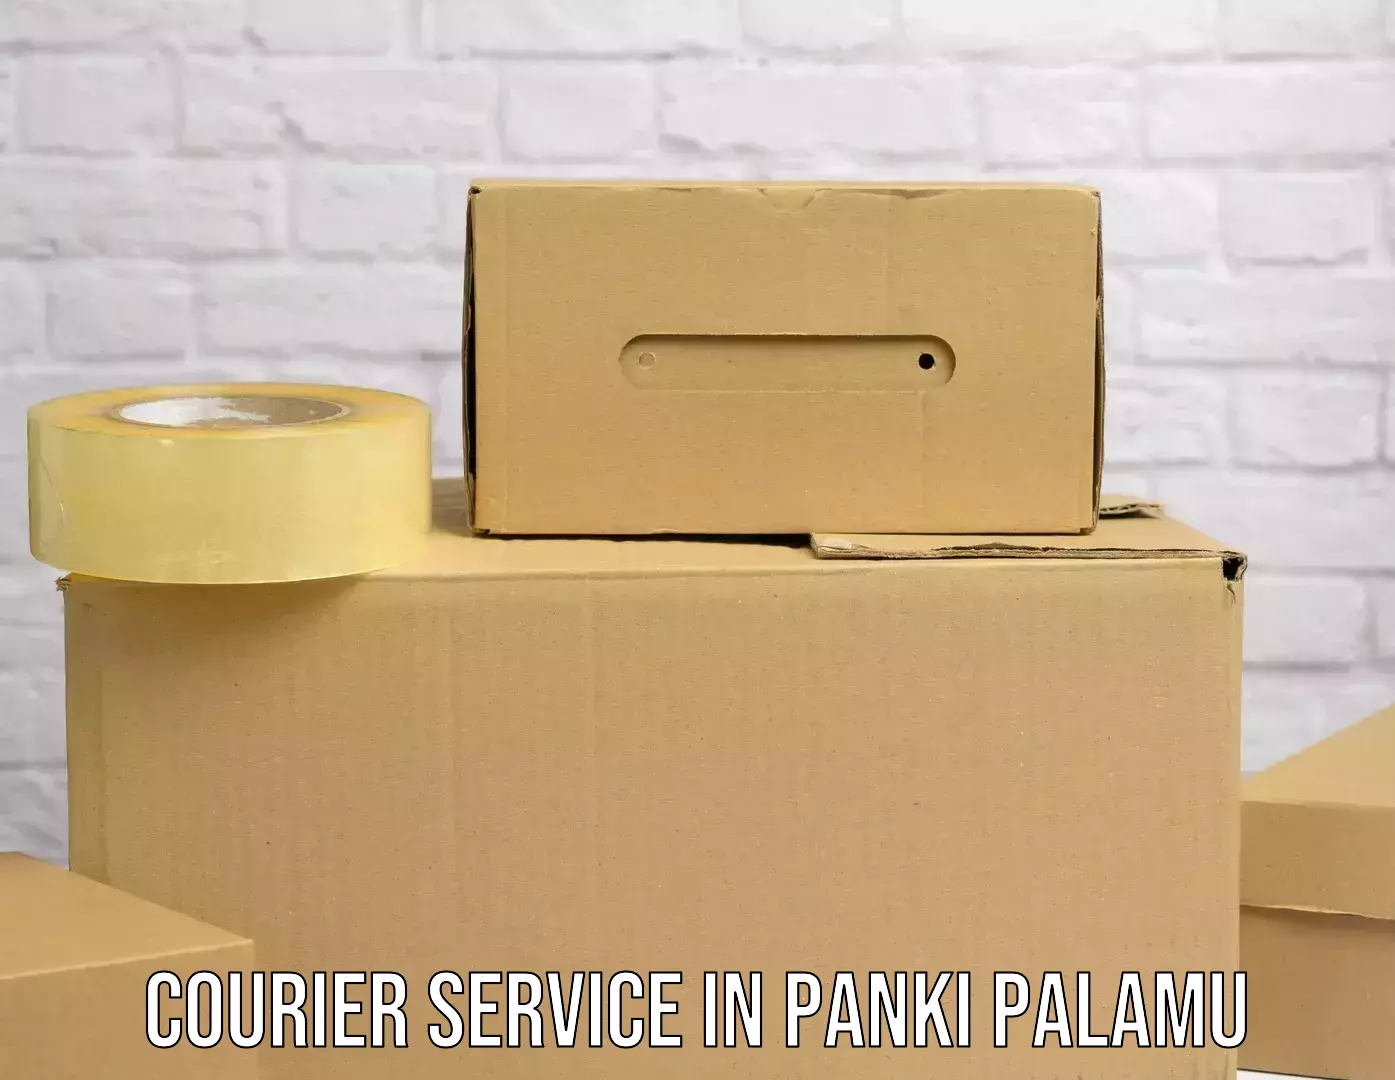 Cash on delivery service in Panki Palamu